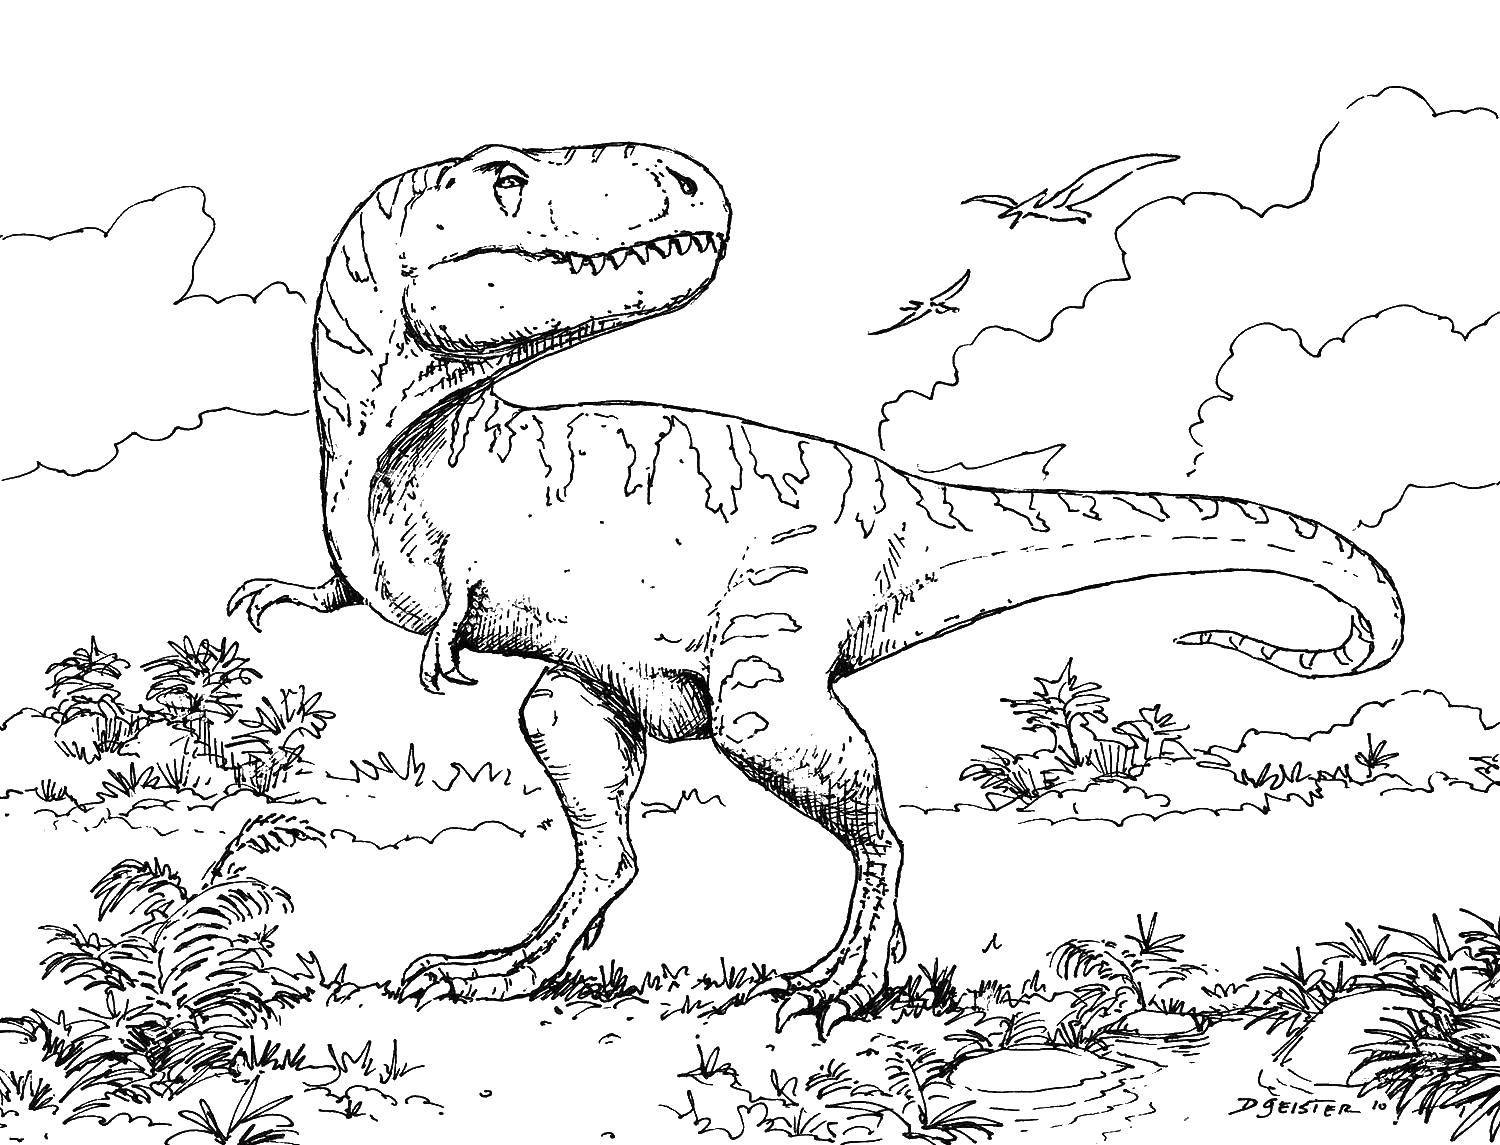 Coloring Tyrannosaurus Royal lizard tyrant . Category Jurassic Park. Tags:  Tyrannosaurus, dinosaur.